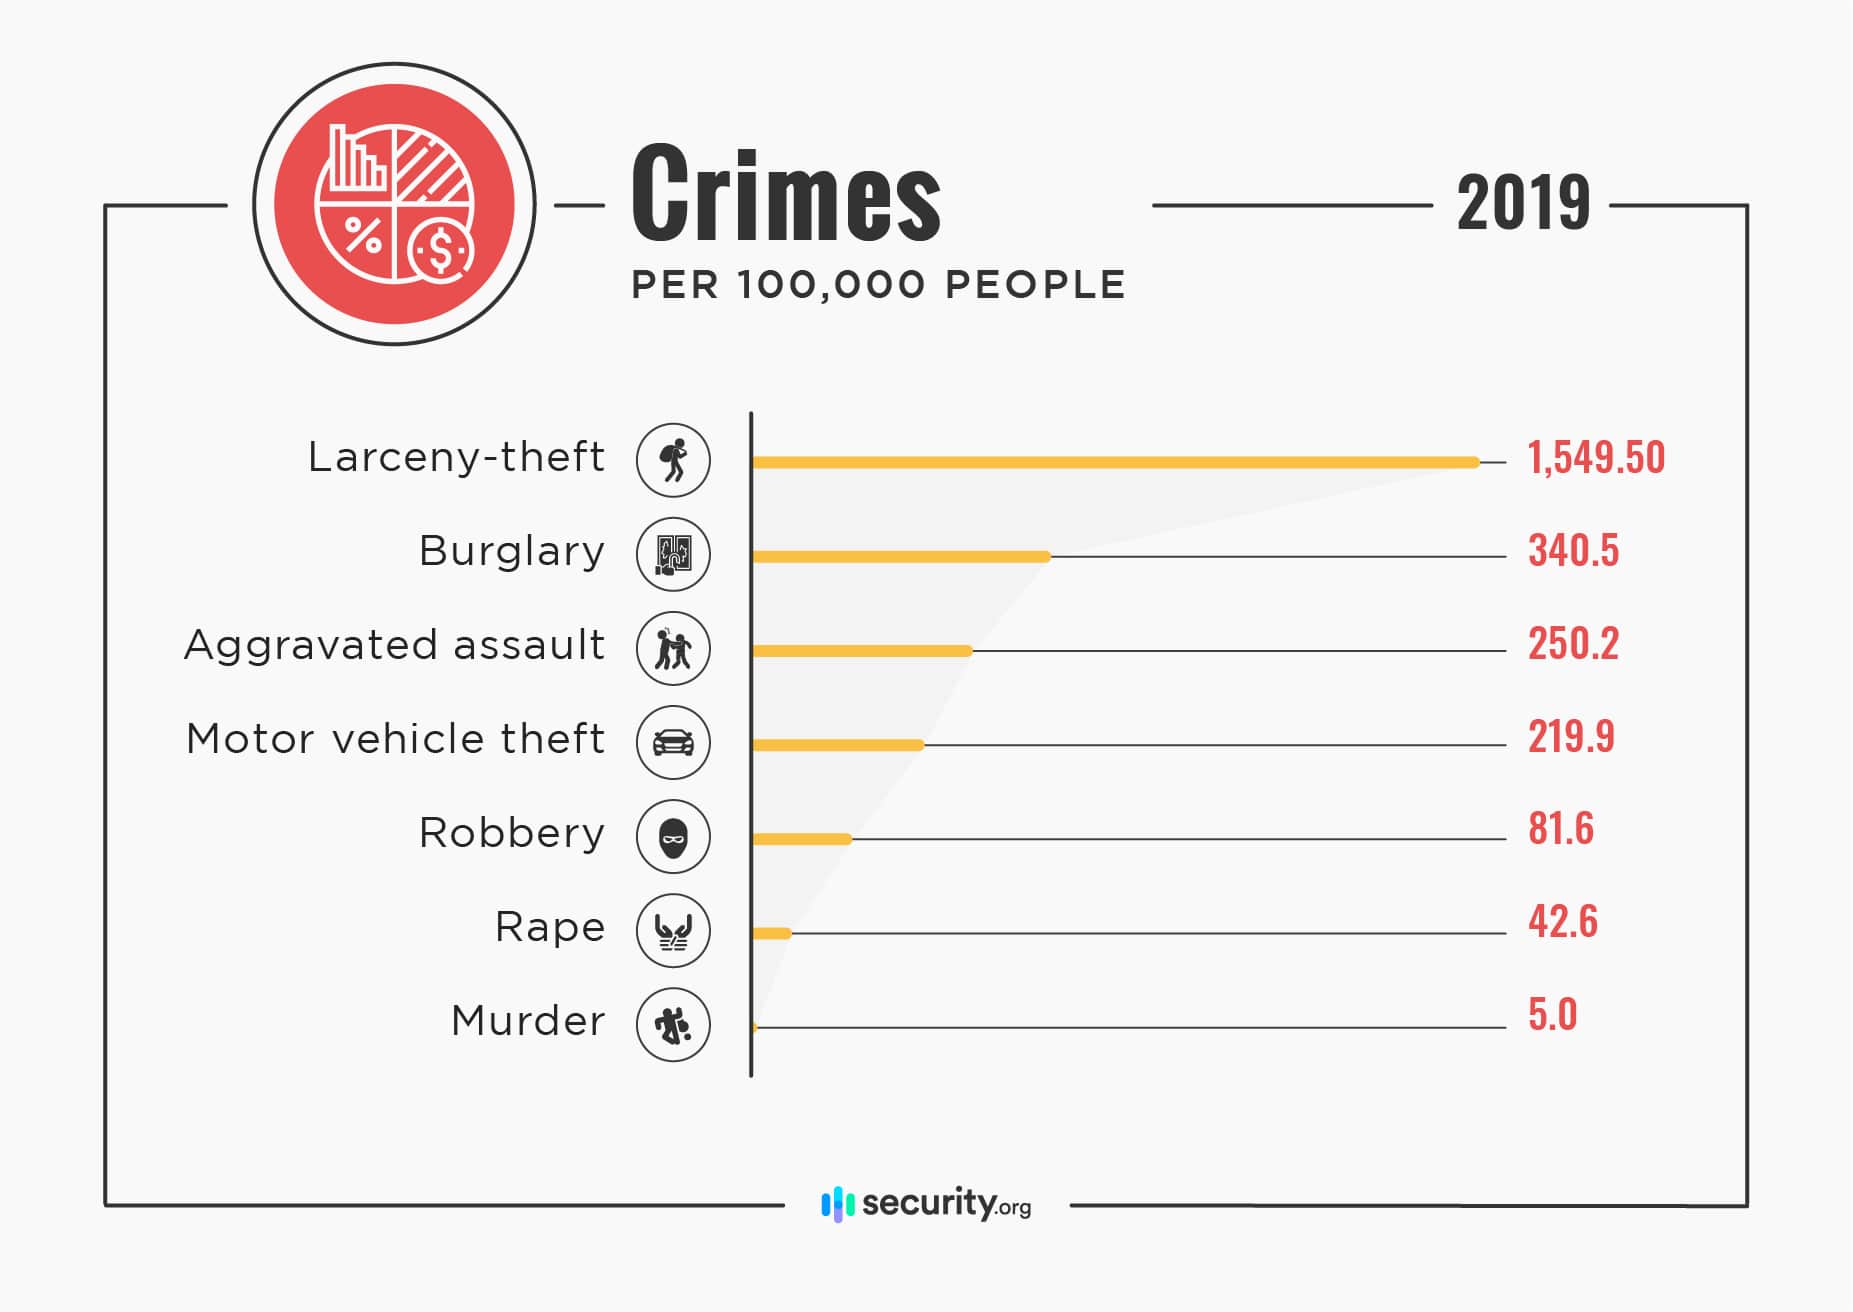 Crimes per 100k people in 2019